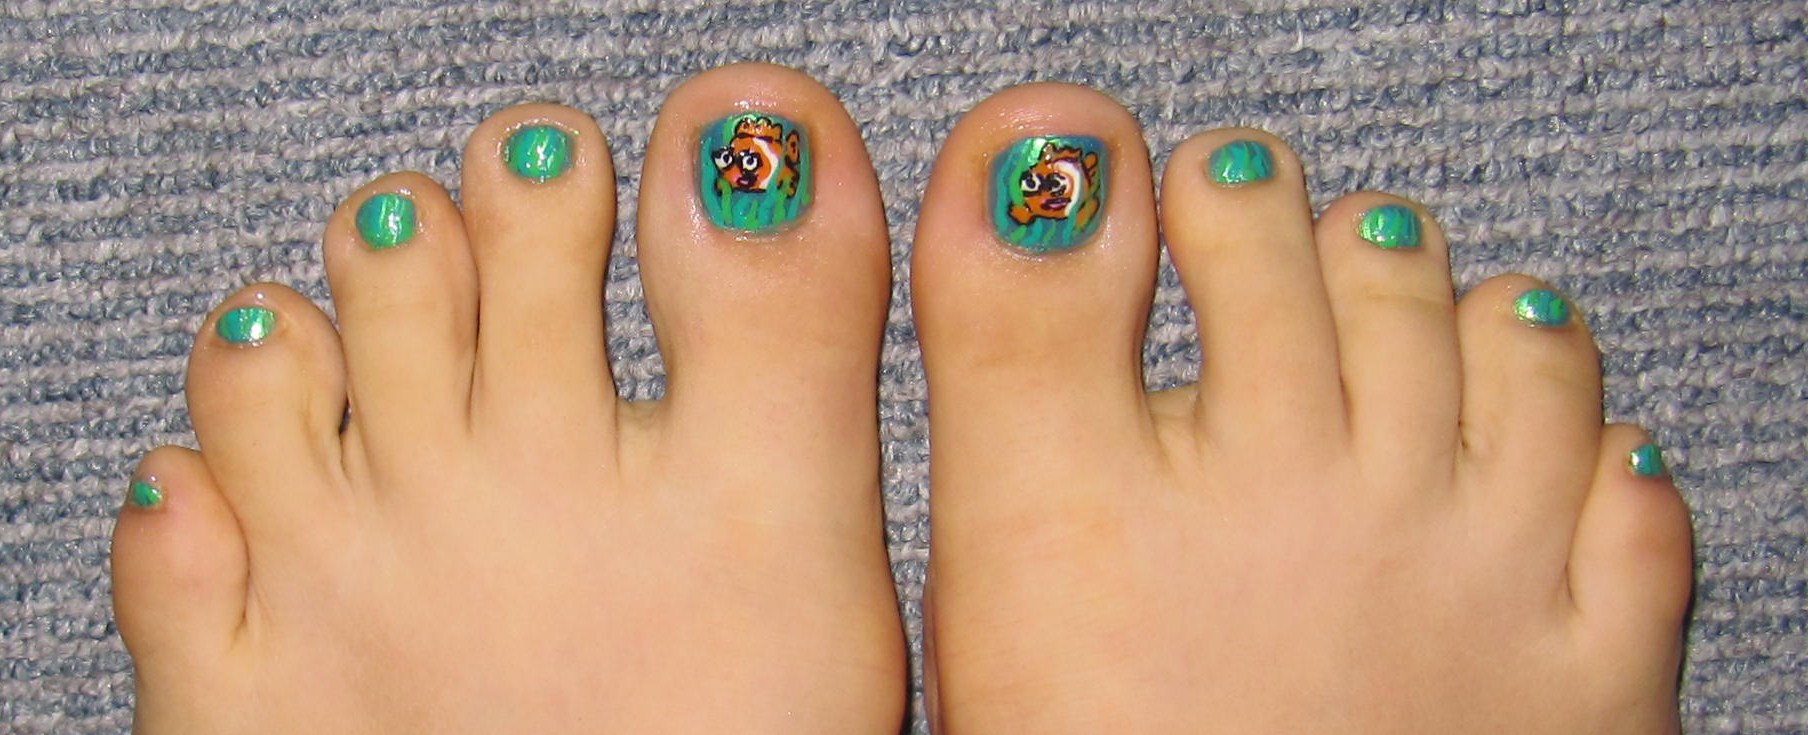 toenails, tutorial Tags: Disney, essence, MaxFactor, nail art, nail